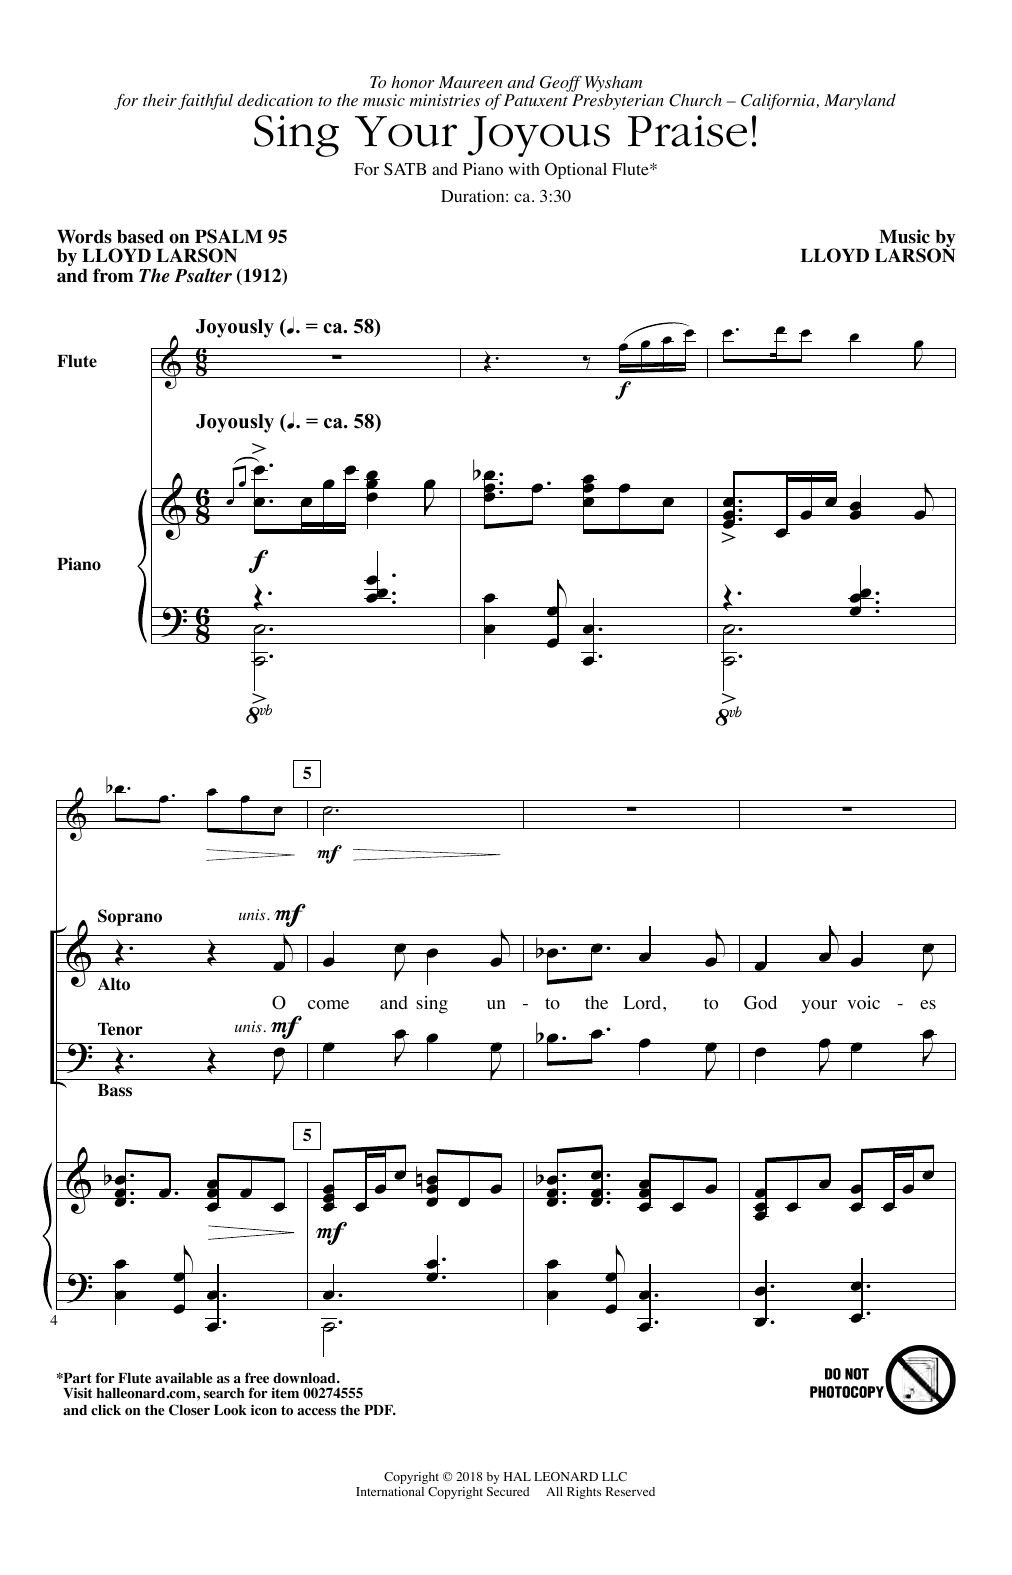 Lloyd Larson Sing Your Joyous Praise! Sheet Music Notes & Chords for Choral - Download or Print PDF